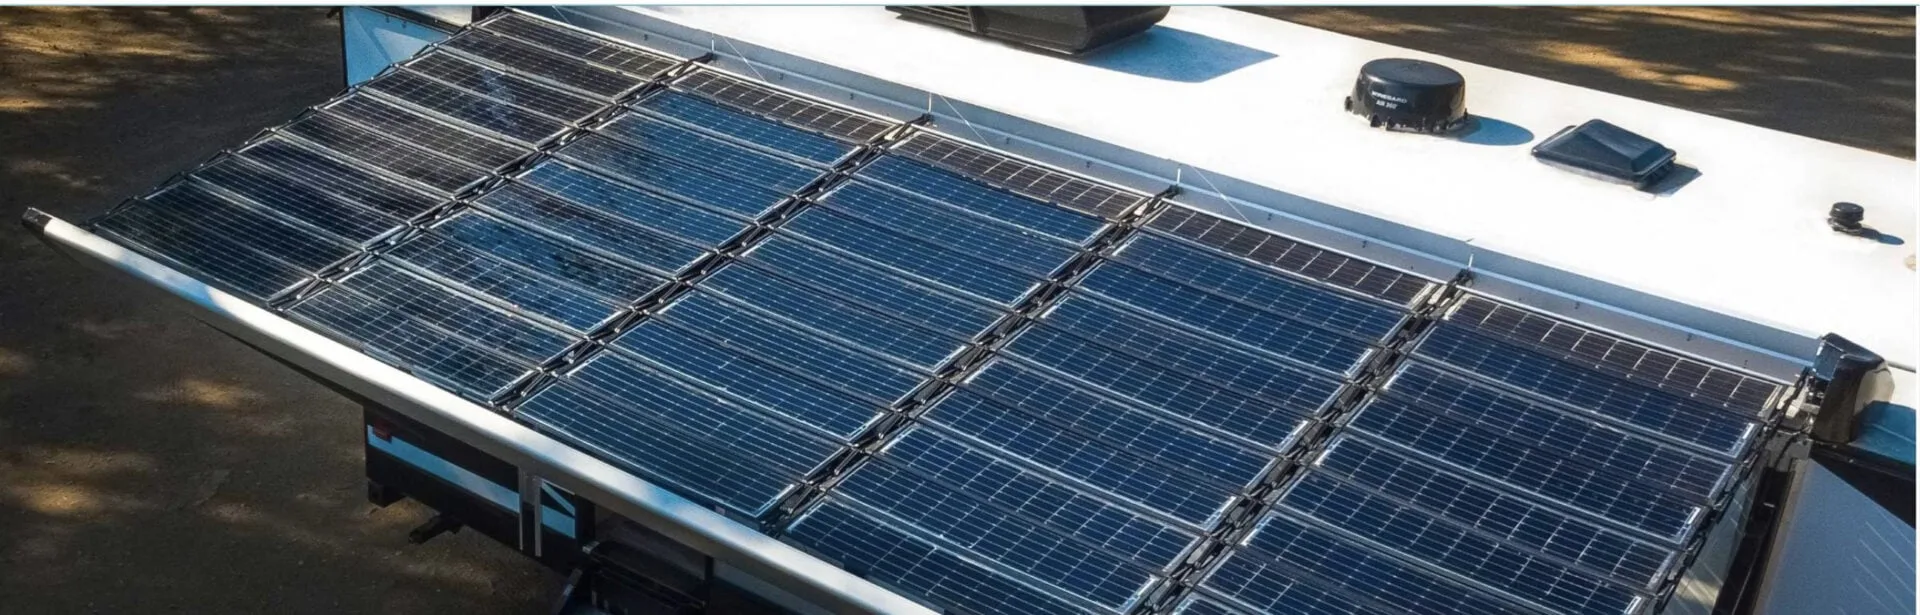 Solar RV awning panels